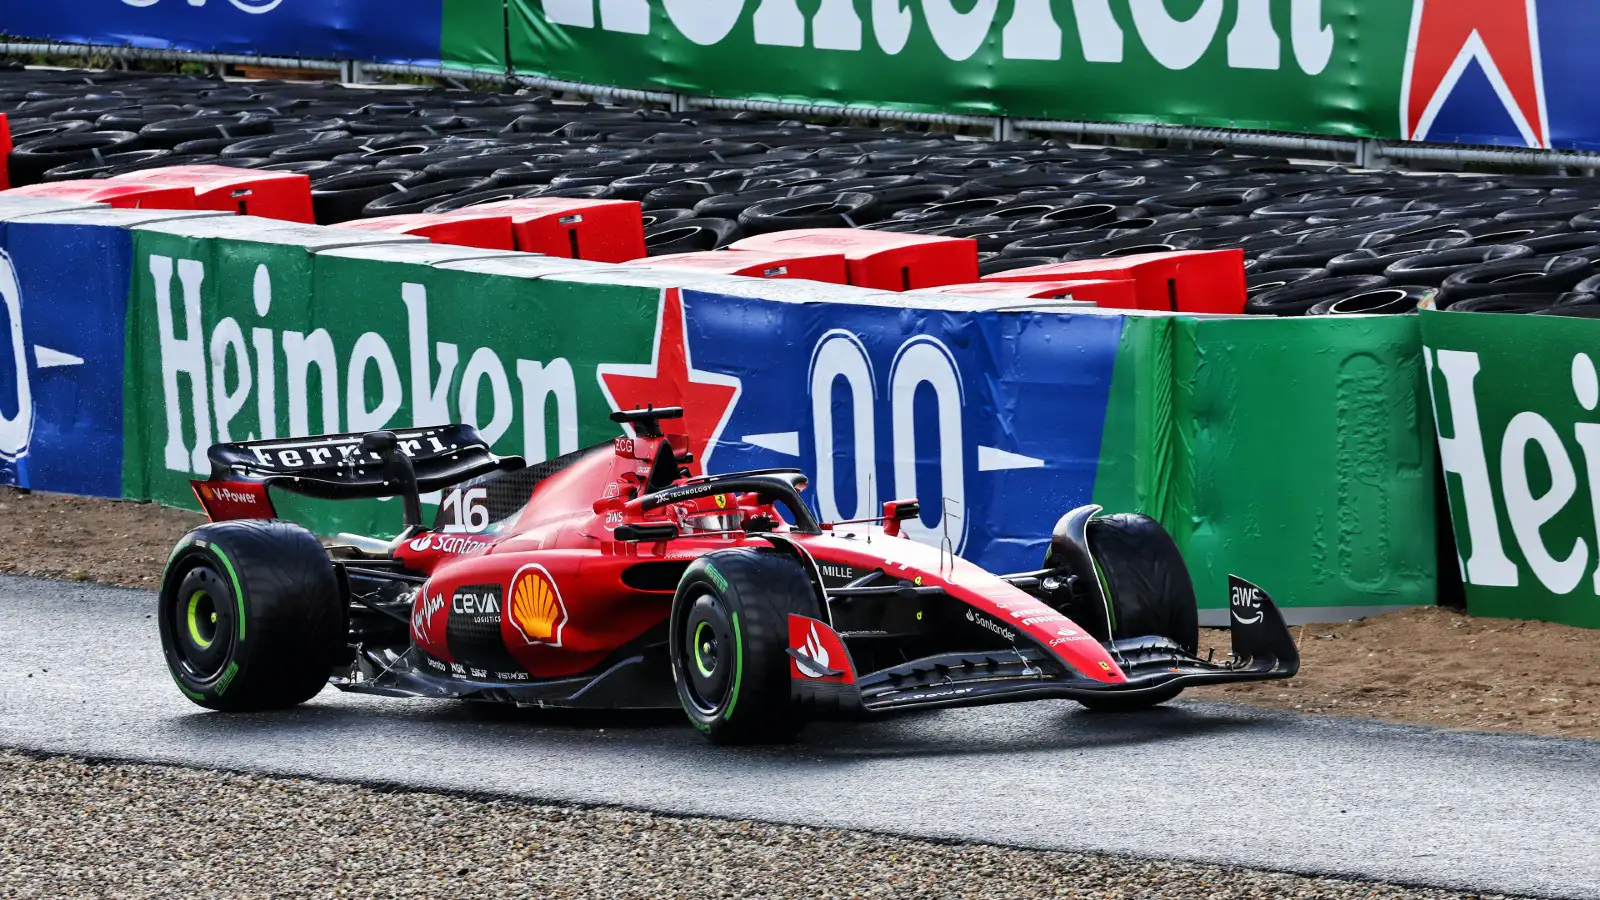 Charles Leclerc, Ferrari F1 driver, goes off track at Zandvoort during the Dutch Grand Prix weekend.